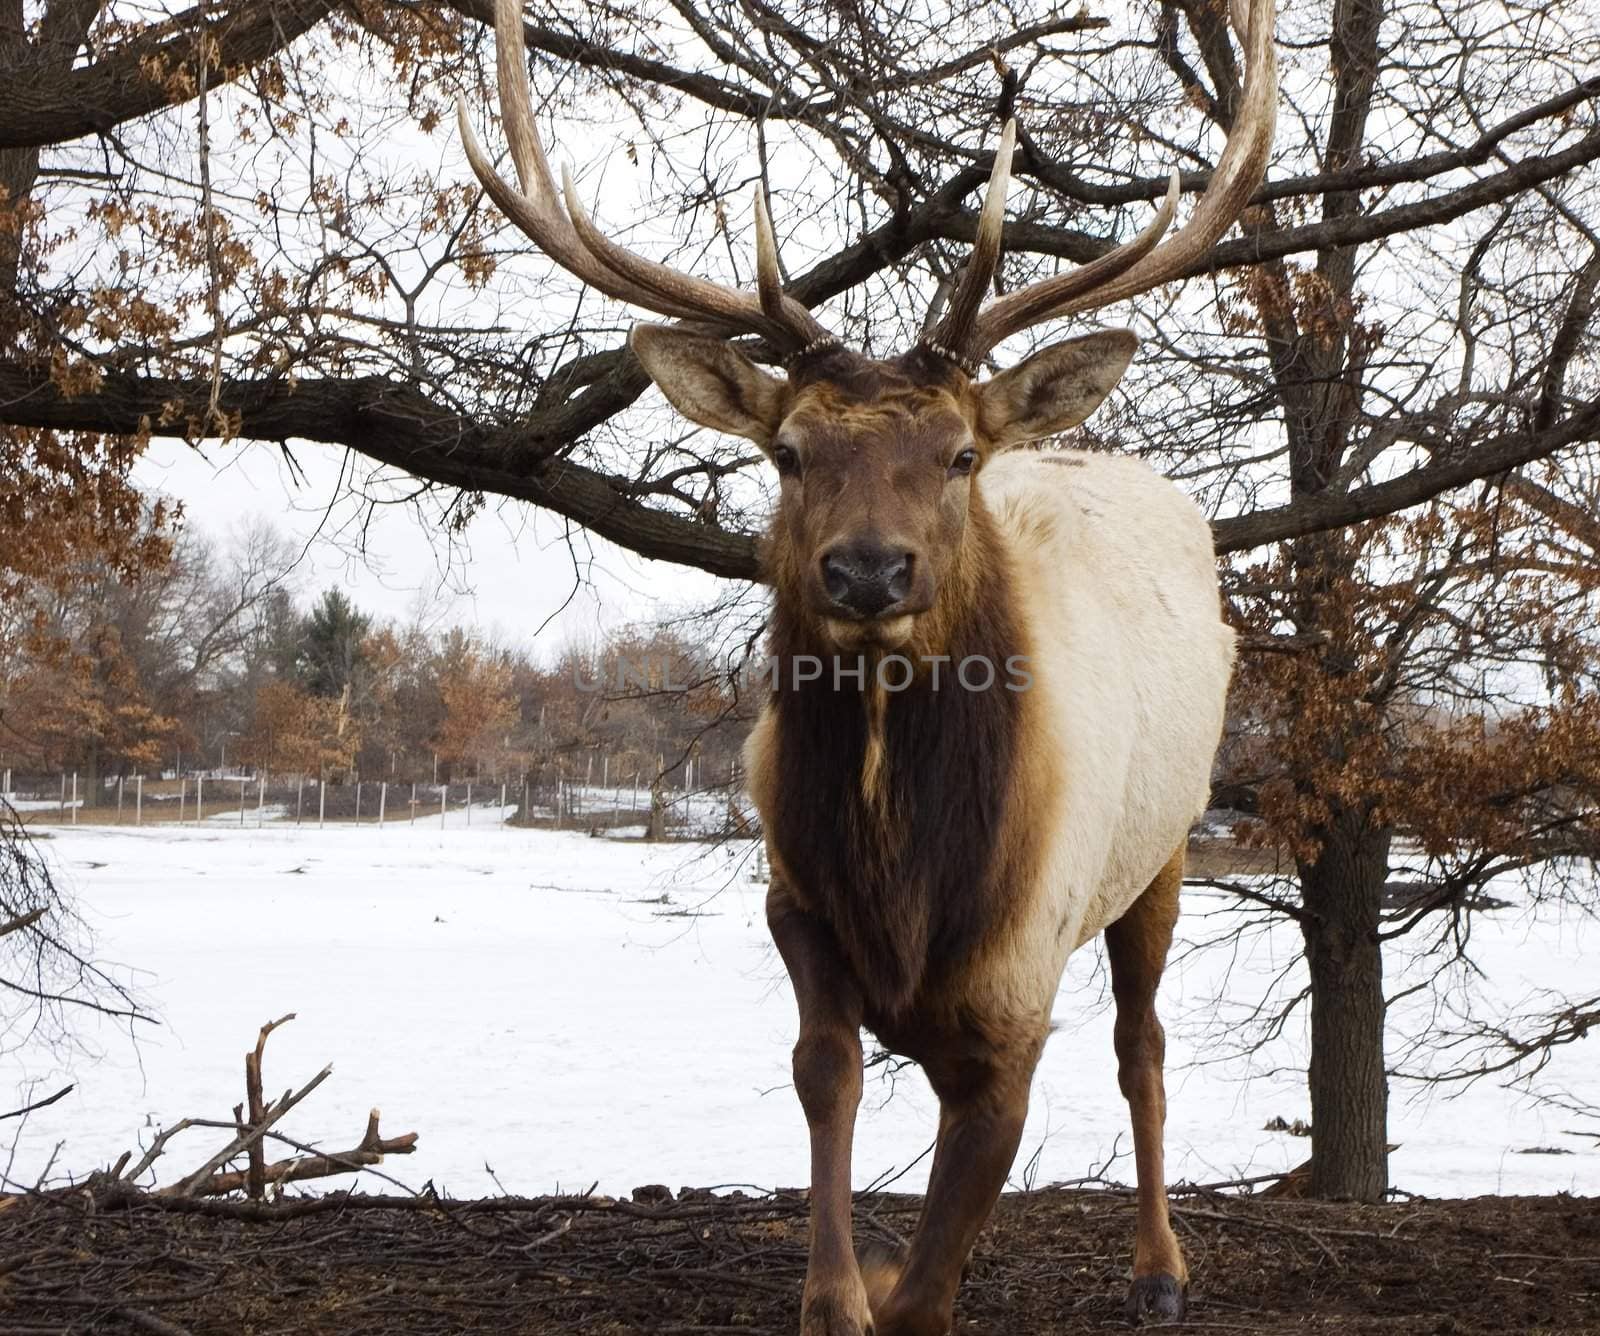 Charging male bull elk in the wild